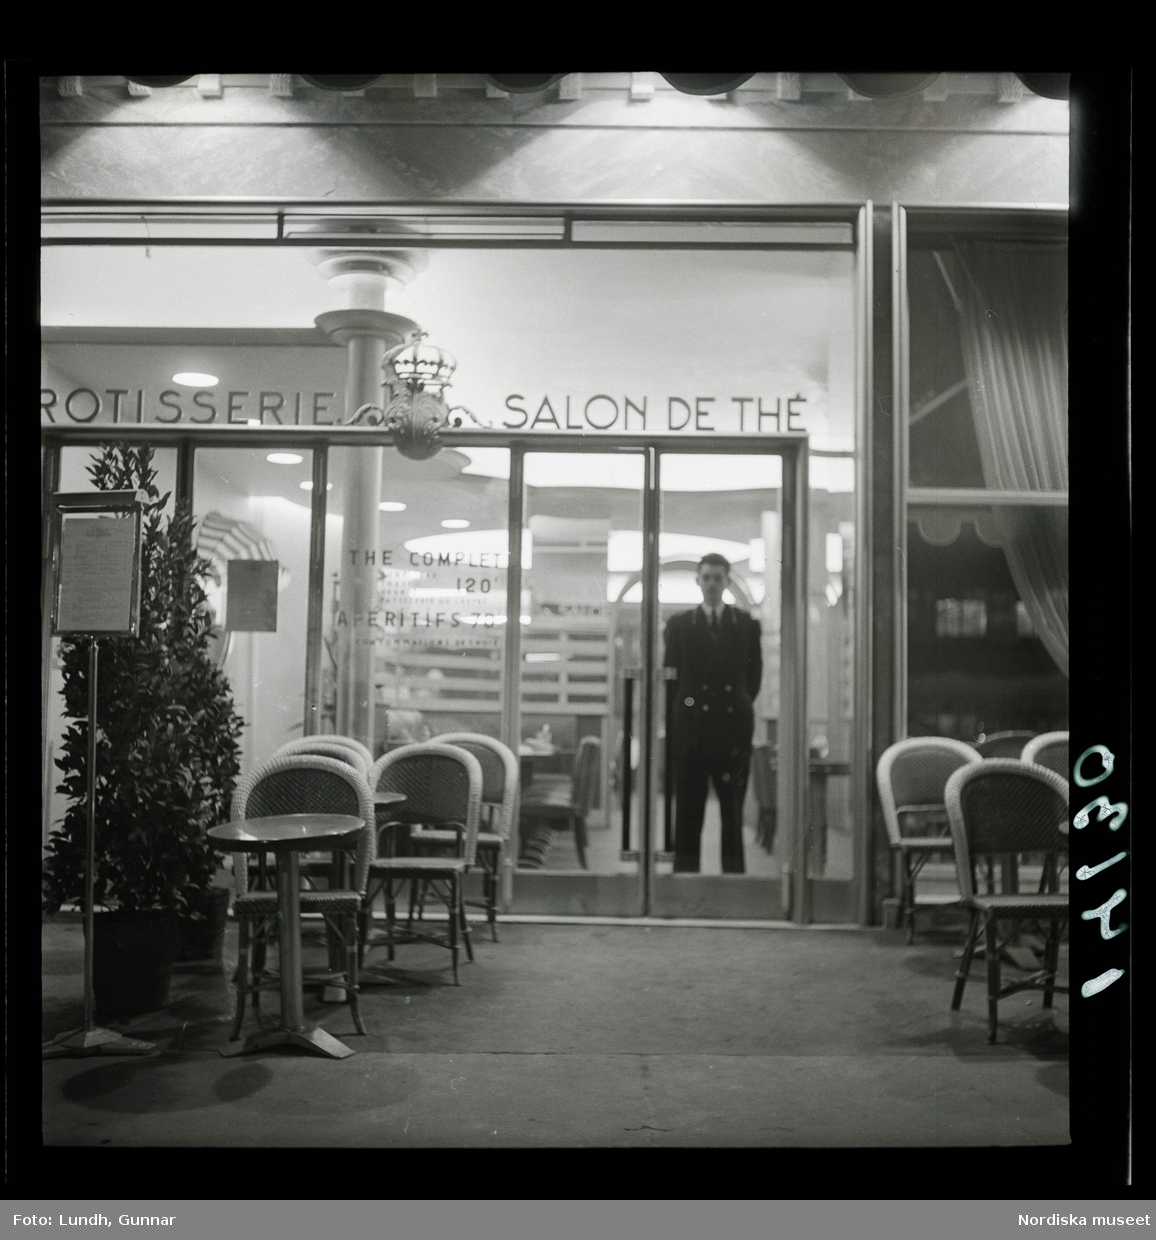 1950. Paris. "Rotisserie Salon de thé" sett från gatan